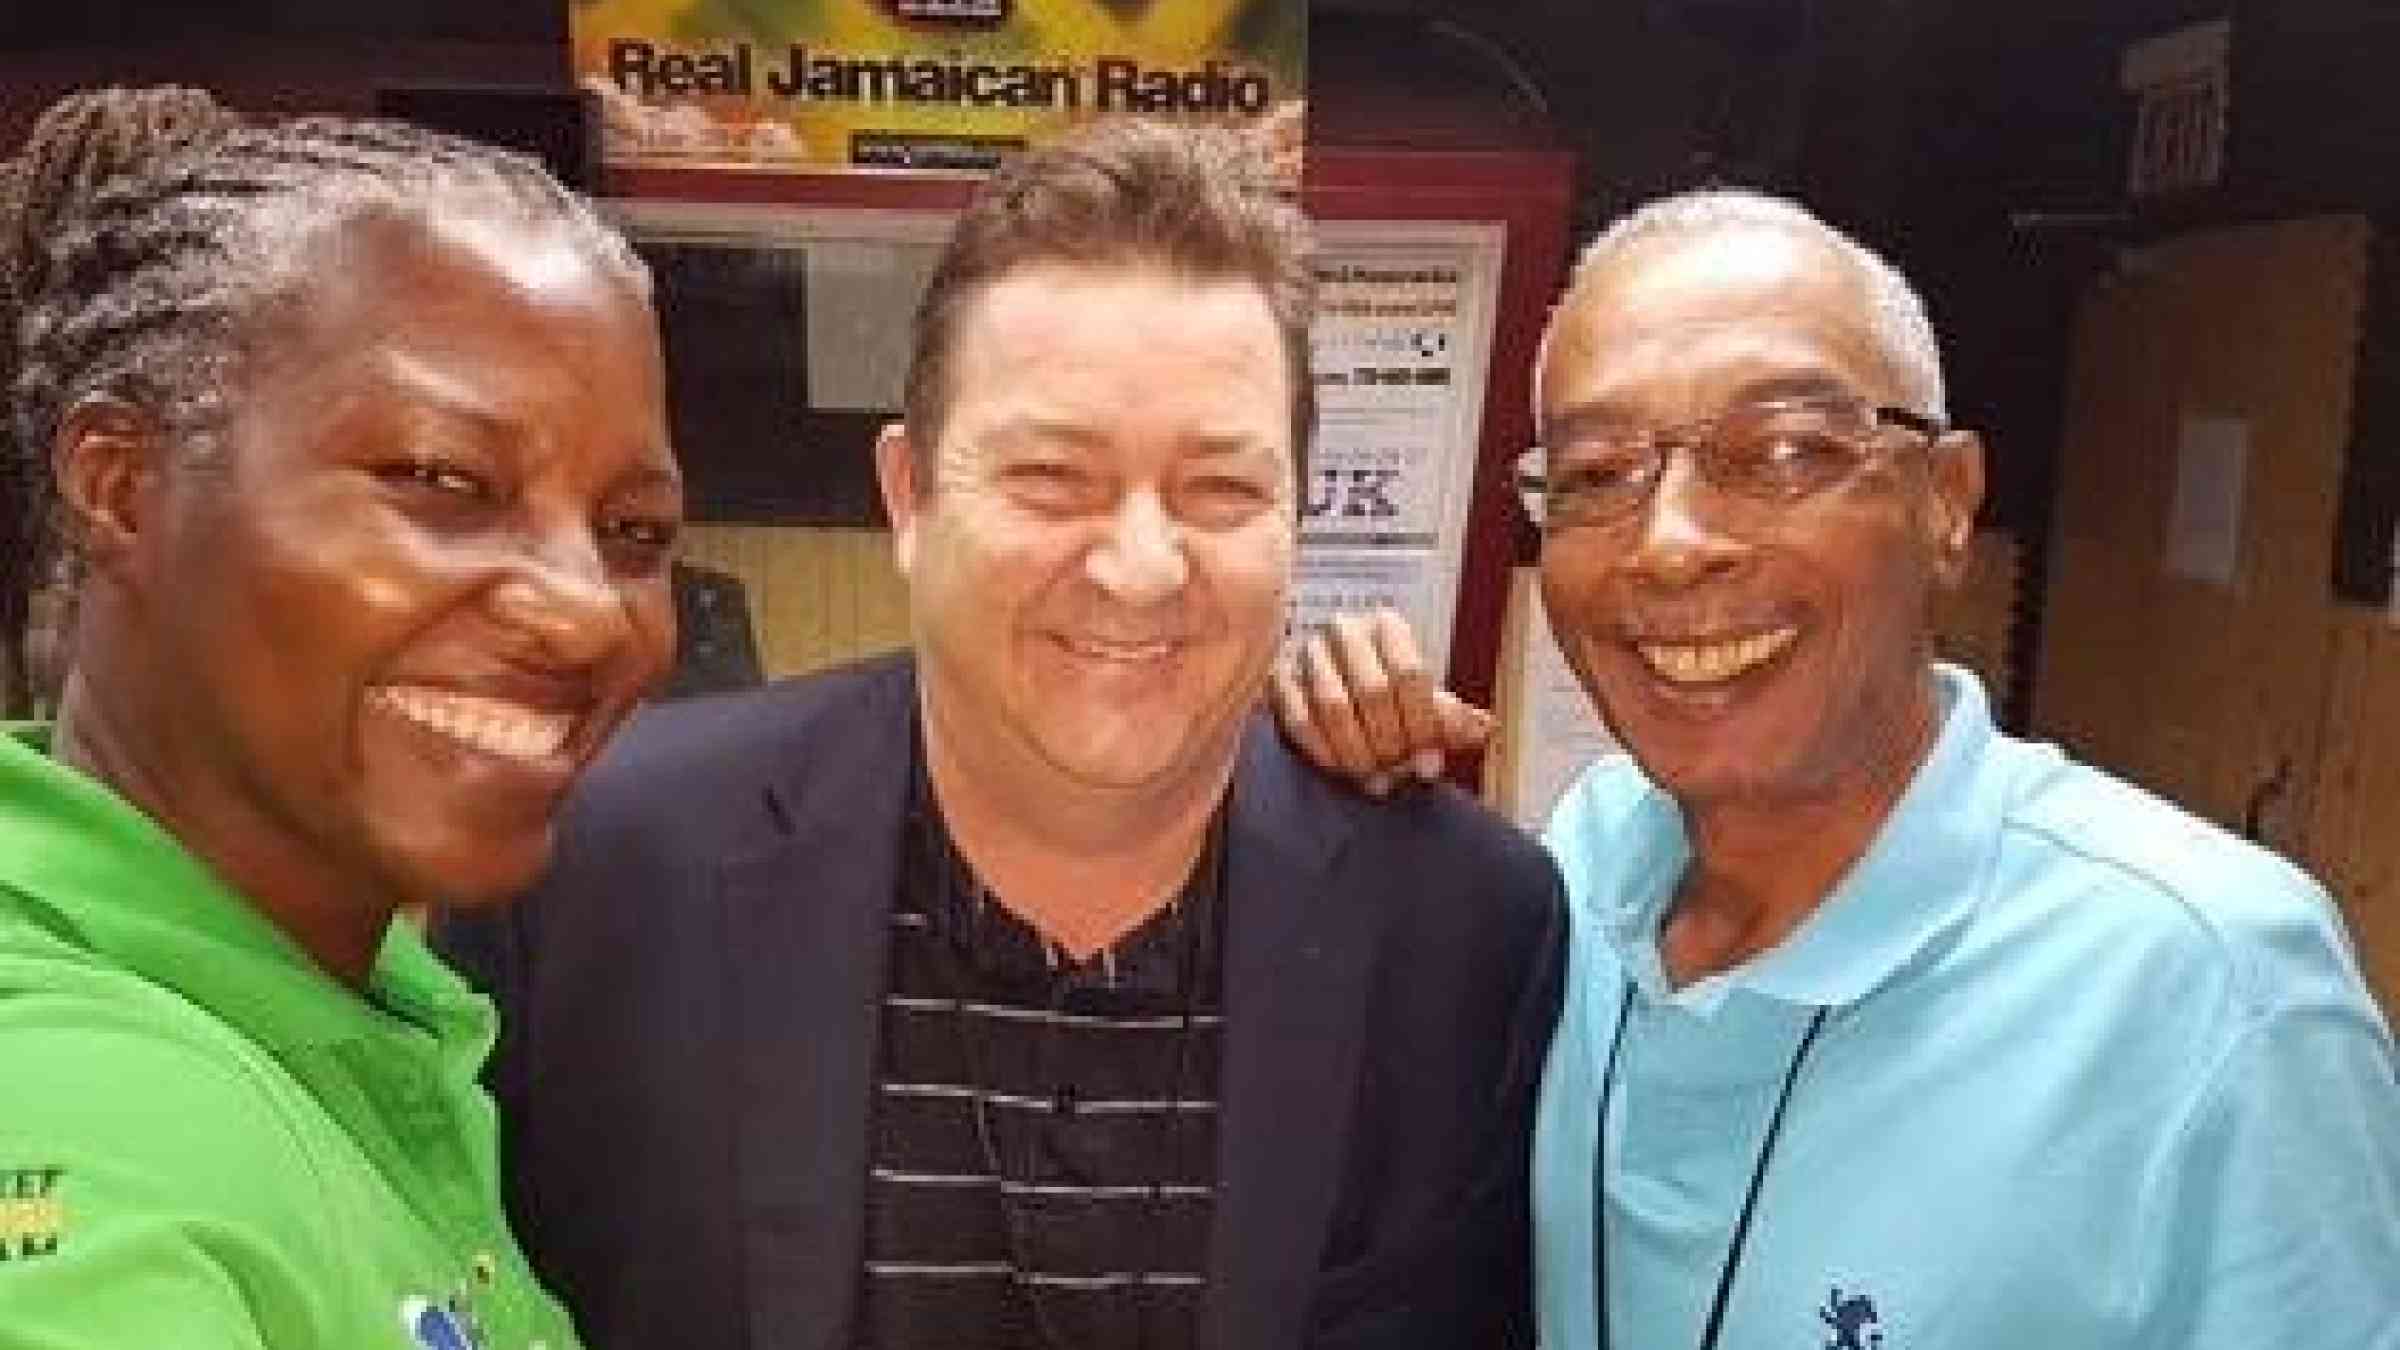 Raising public awareness of disaster risk reduction: UNISDR's Neil McFarlane (centre) with presenters Paula-Anne Porter Jones (left) and Alan Magnus (right) at Radio Jamaica RJR 94FM